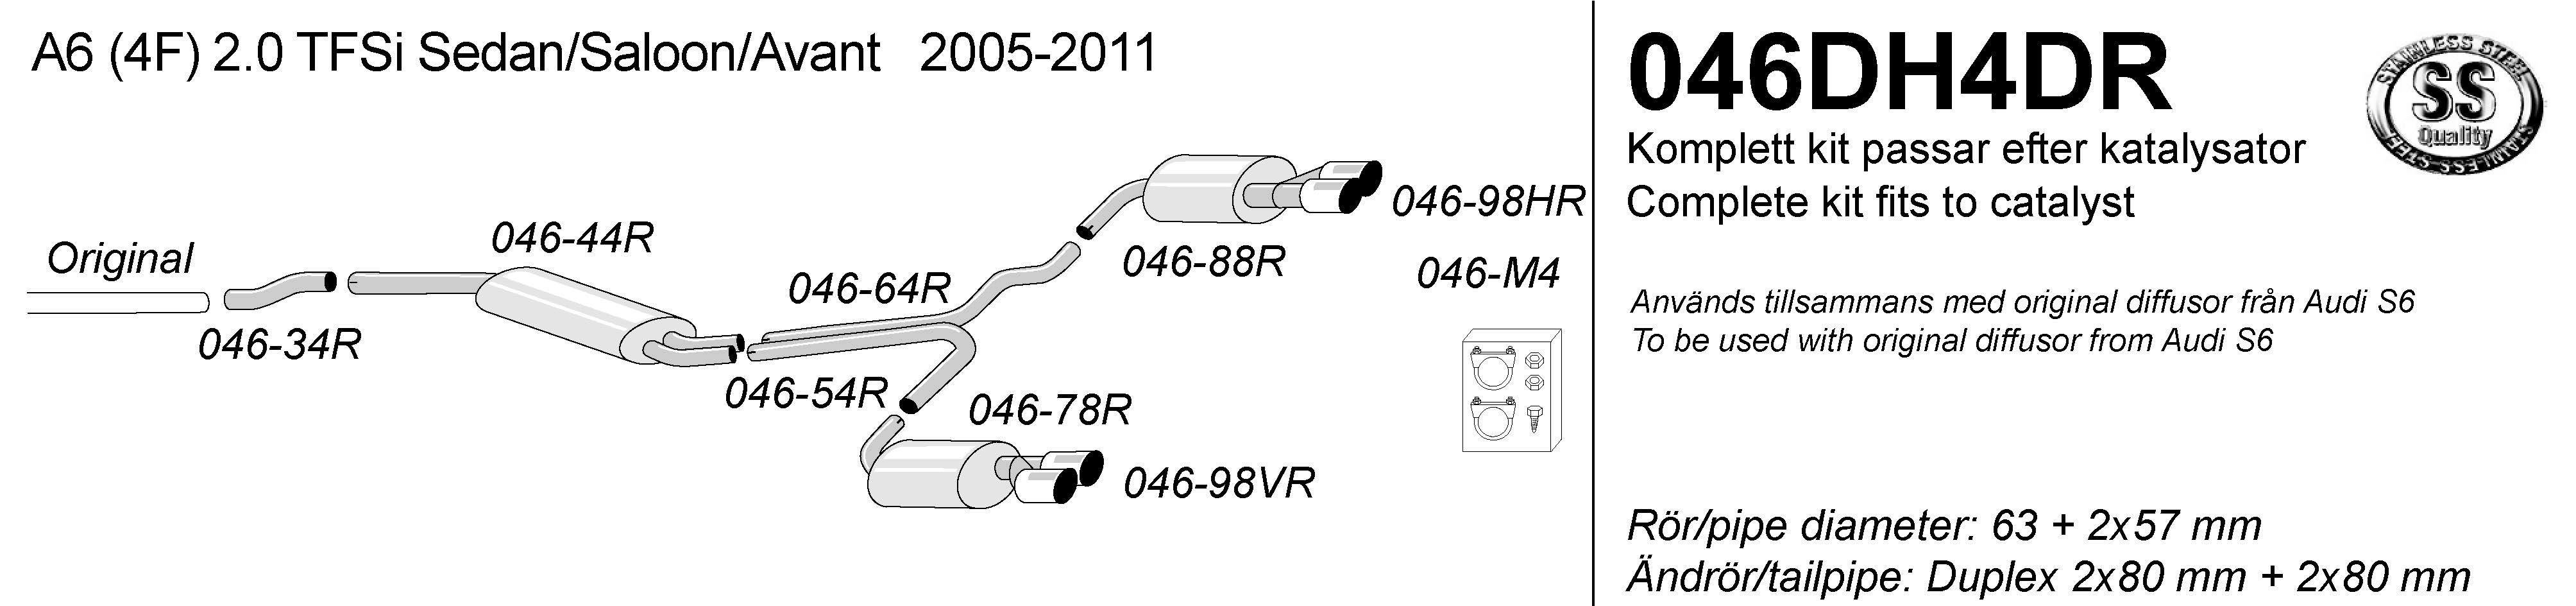 SIMONS 2xDuplex Sport Cat-back Exhaust AUDI A6 (C6) 2.0 TFSI 2005-2011